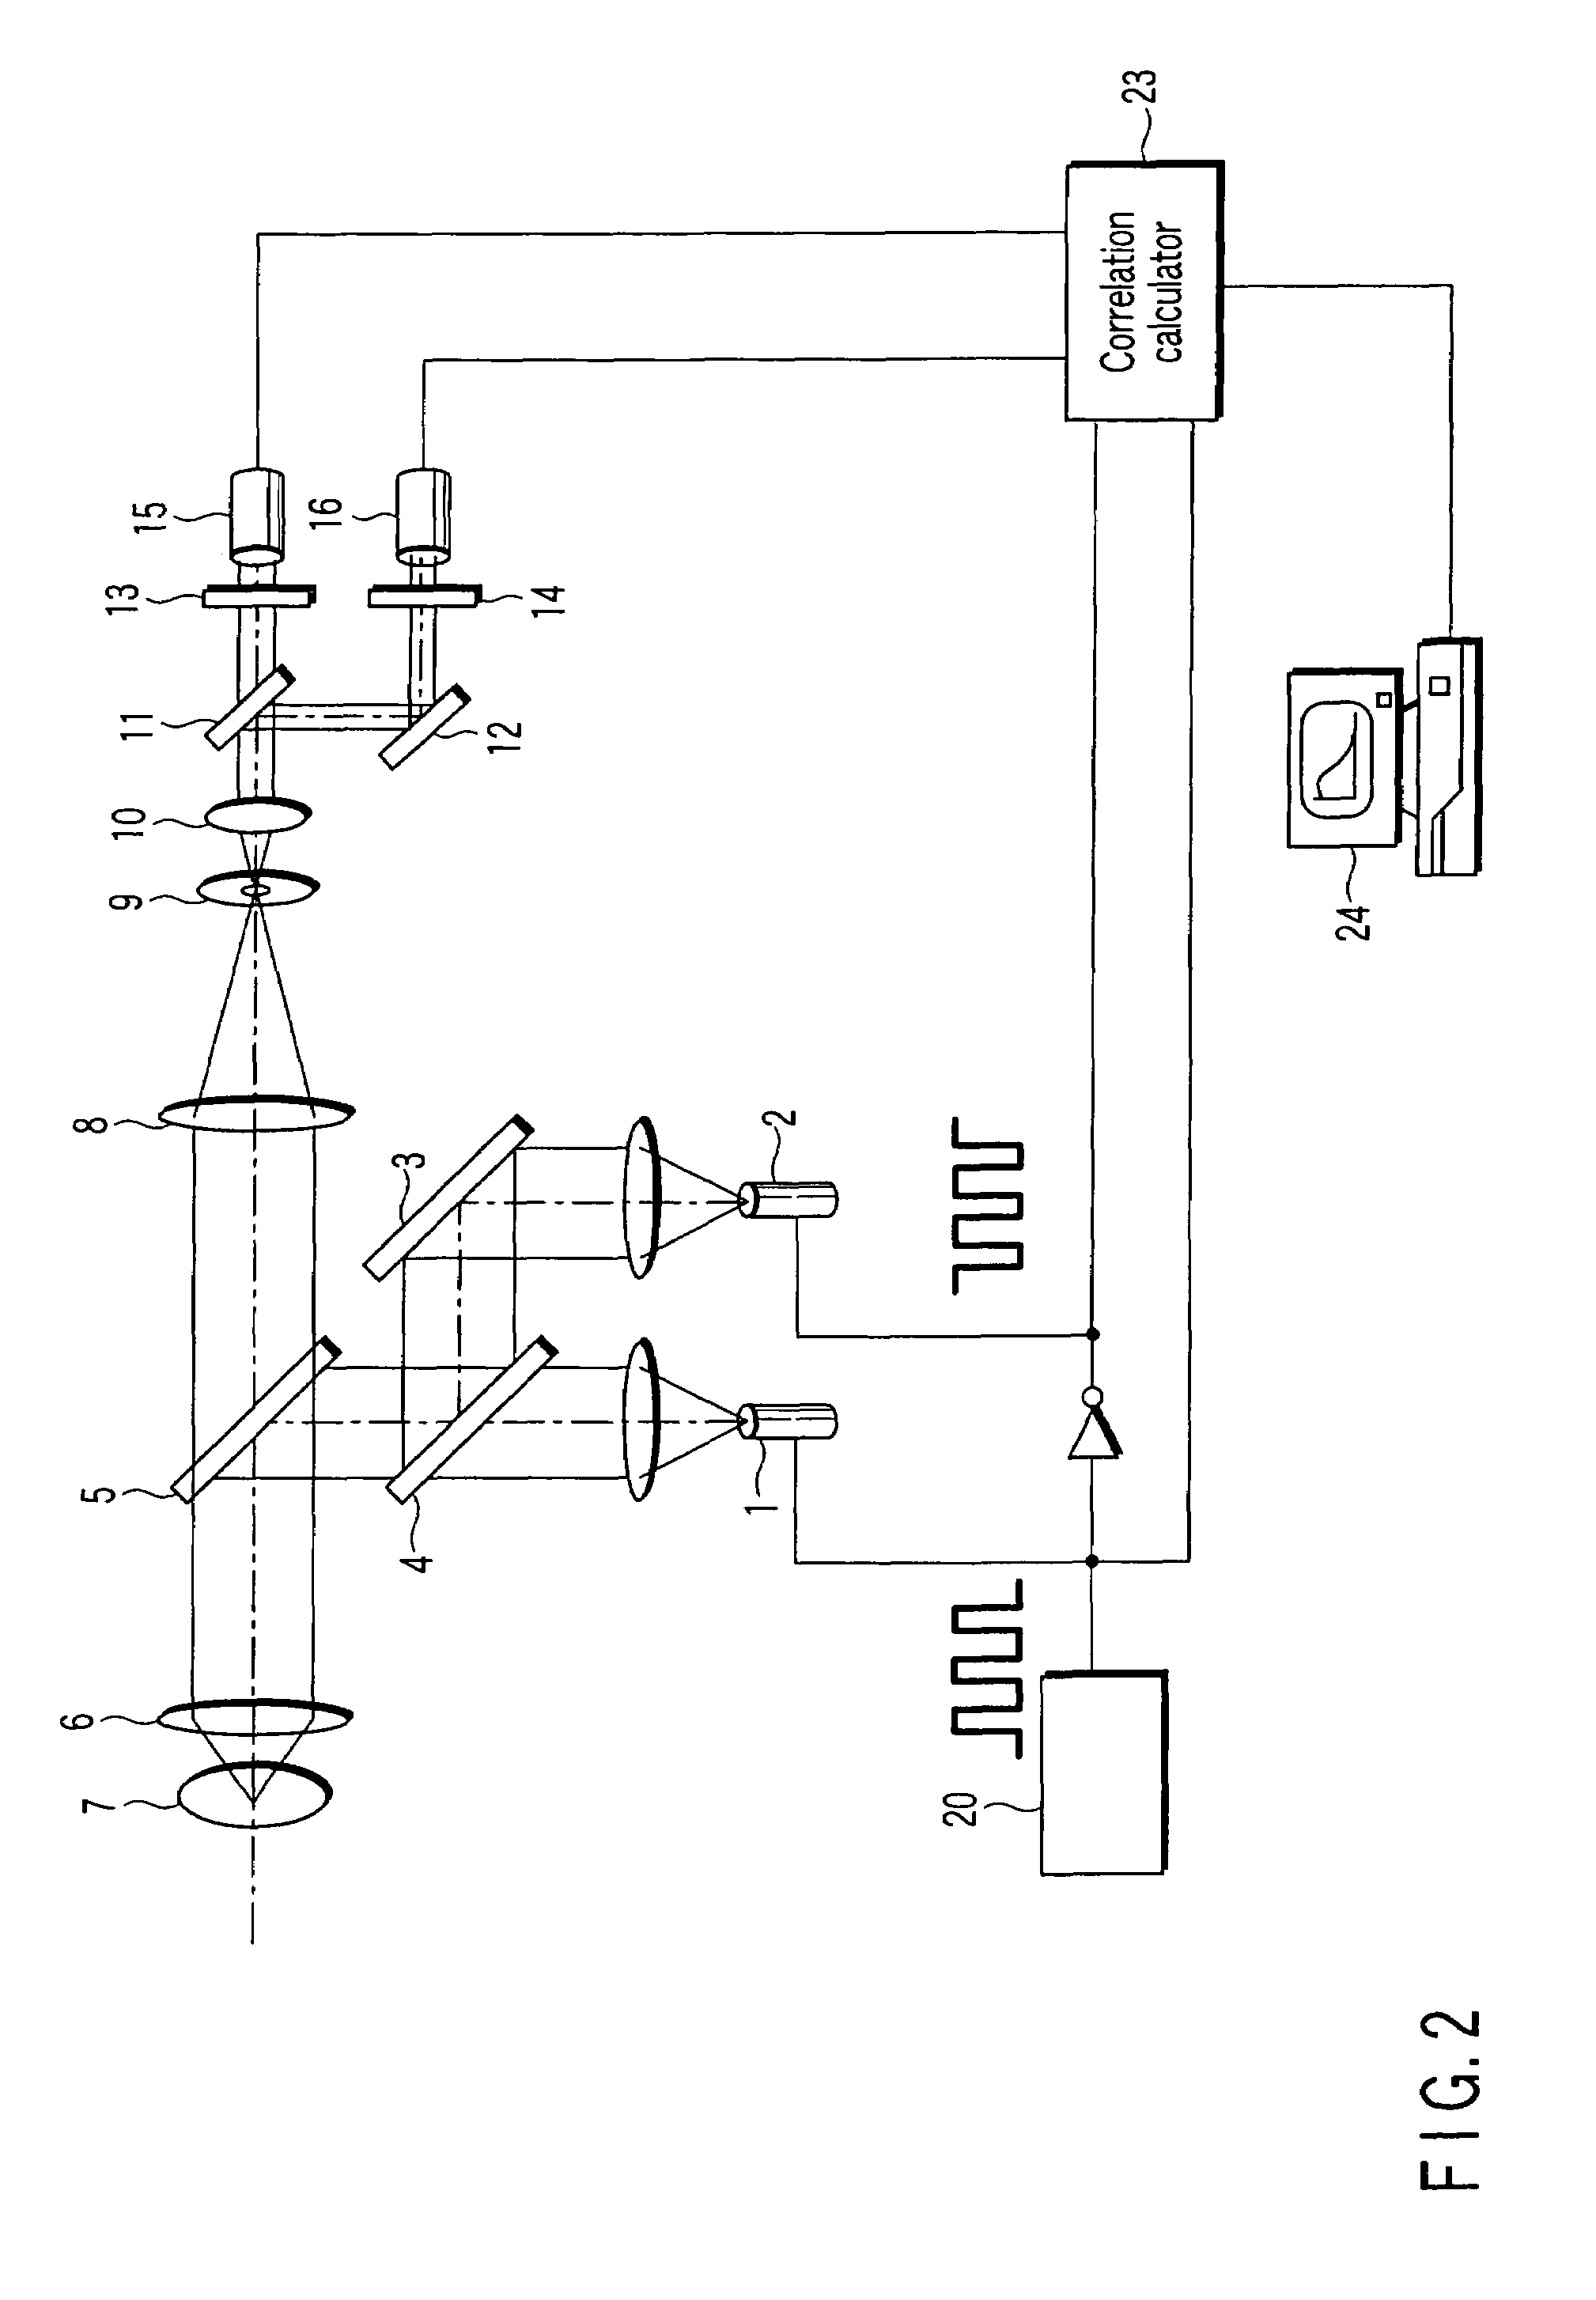 Fluorescence spectroscopic apparatus